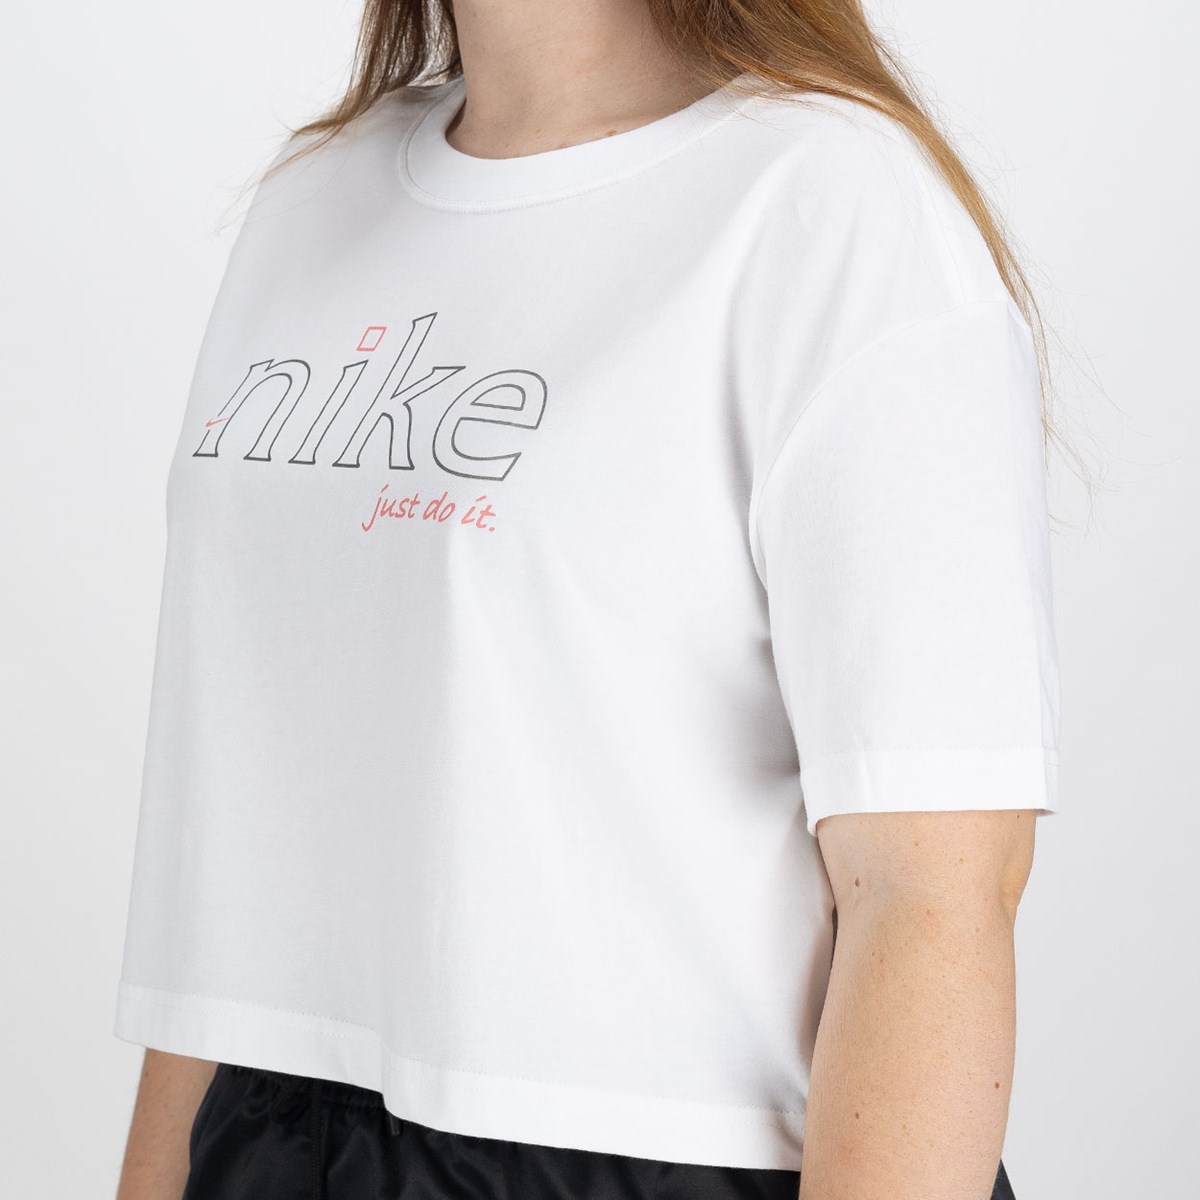 Plus Size - Camiseta Nike Sportswear Fiber Feminina - Nike